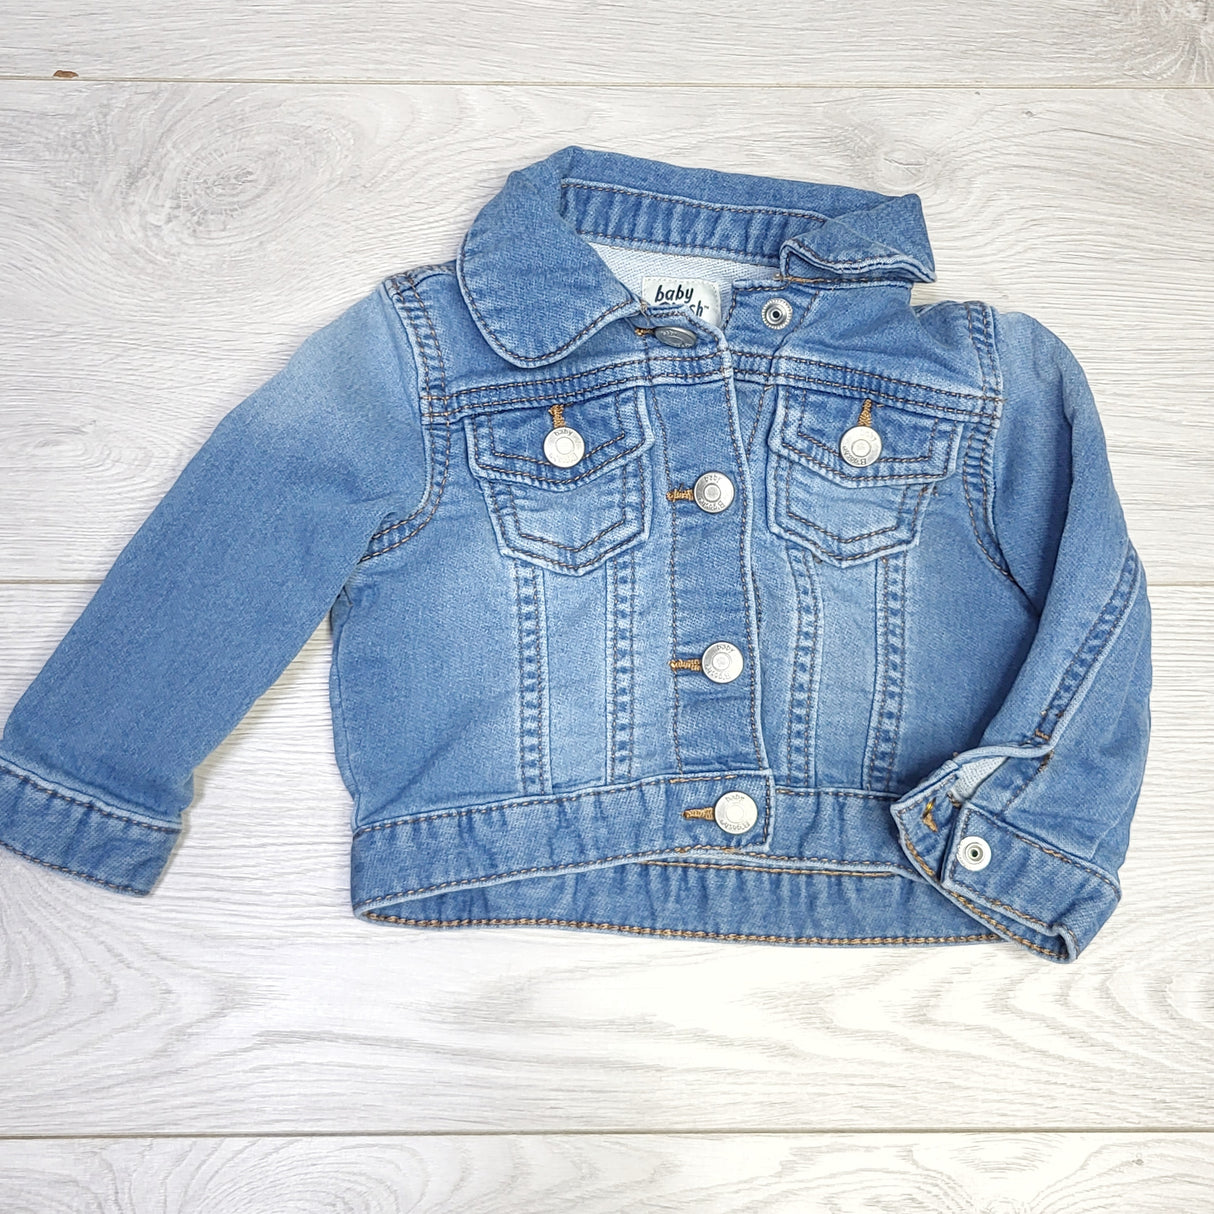 KJHN1 - Baby B'gosh denim jacket with snap buttons. Size 12 months